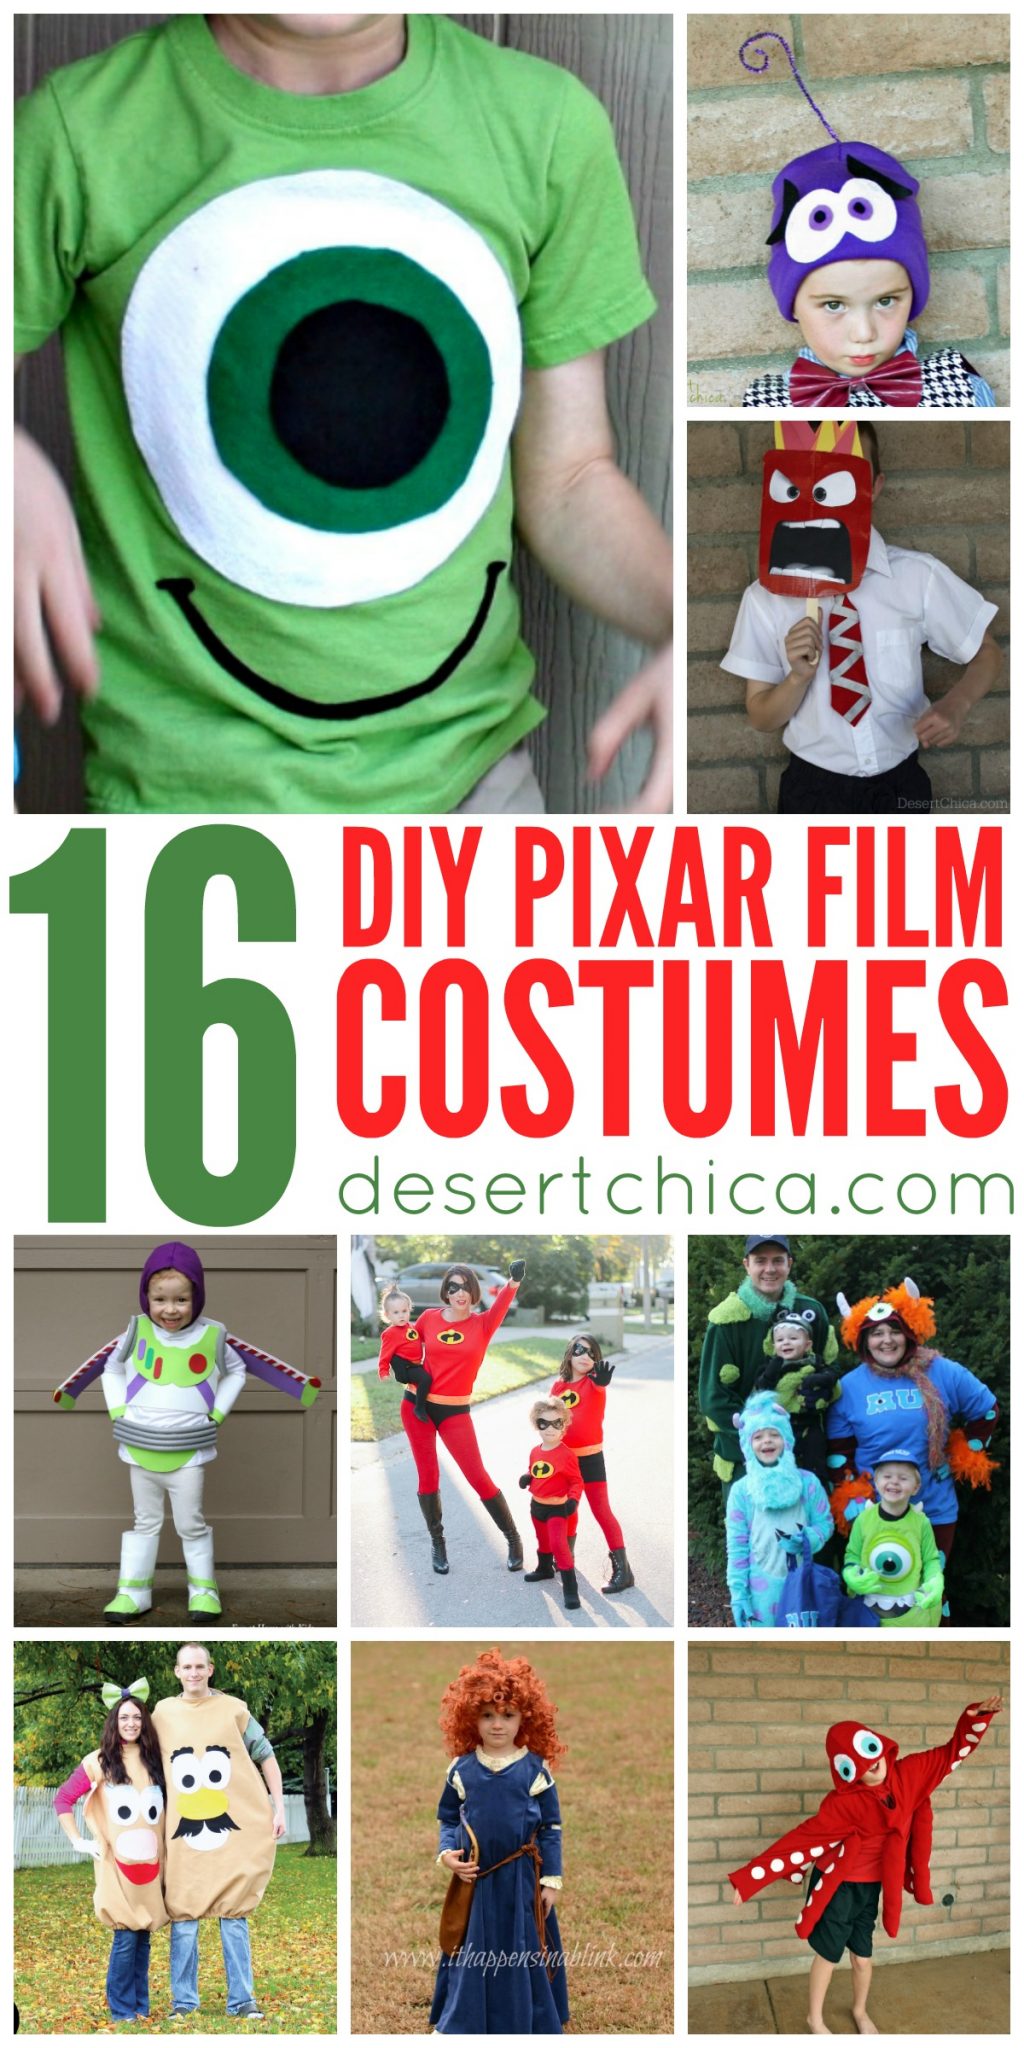 pixar-costumes-withtext